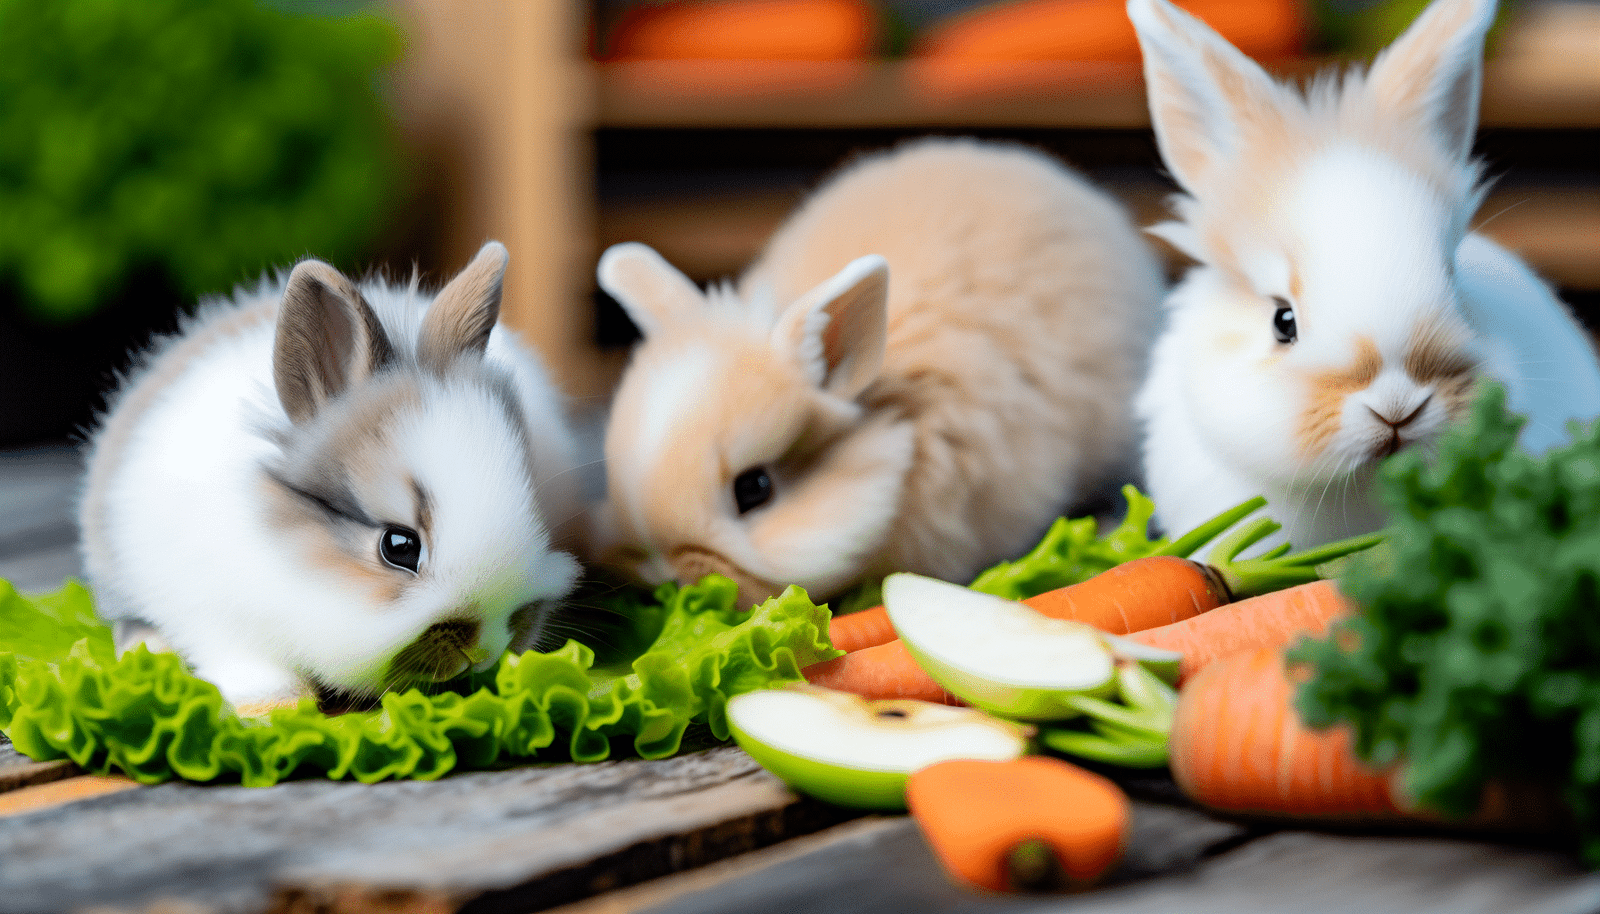 Baby rabbits exploring fresh foods